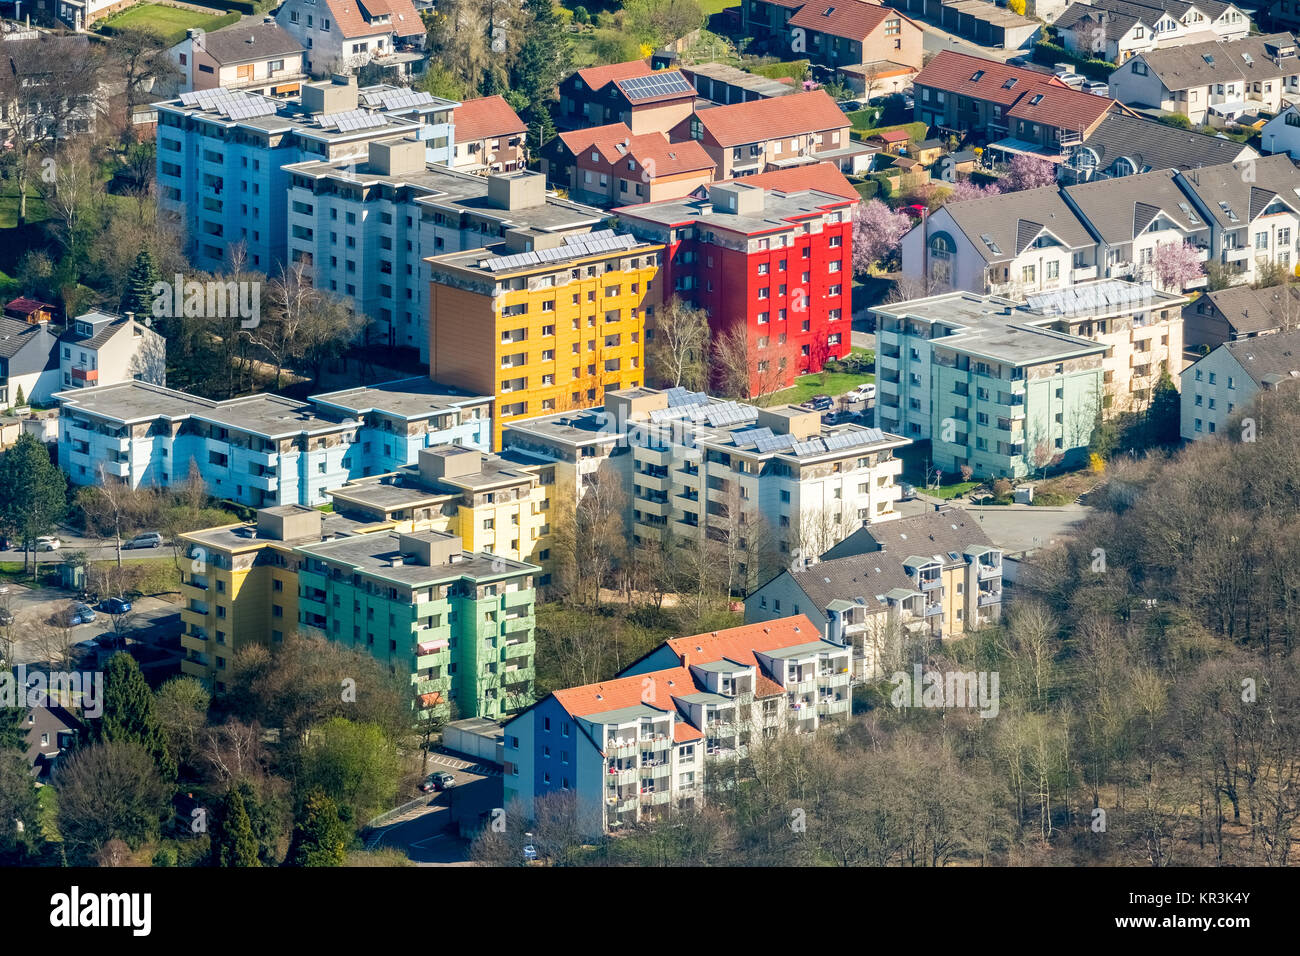 Colorful skyscrapers, tenements, Quambusch, Hoexter road, Hagen, Ruhr area, North Rhine-Westphalia, Germany, Hagen, Ruhr area, North Rhine-Westphalia, Stock Photo